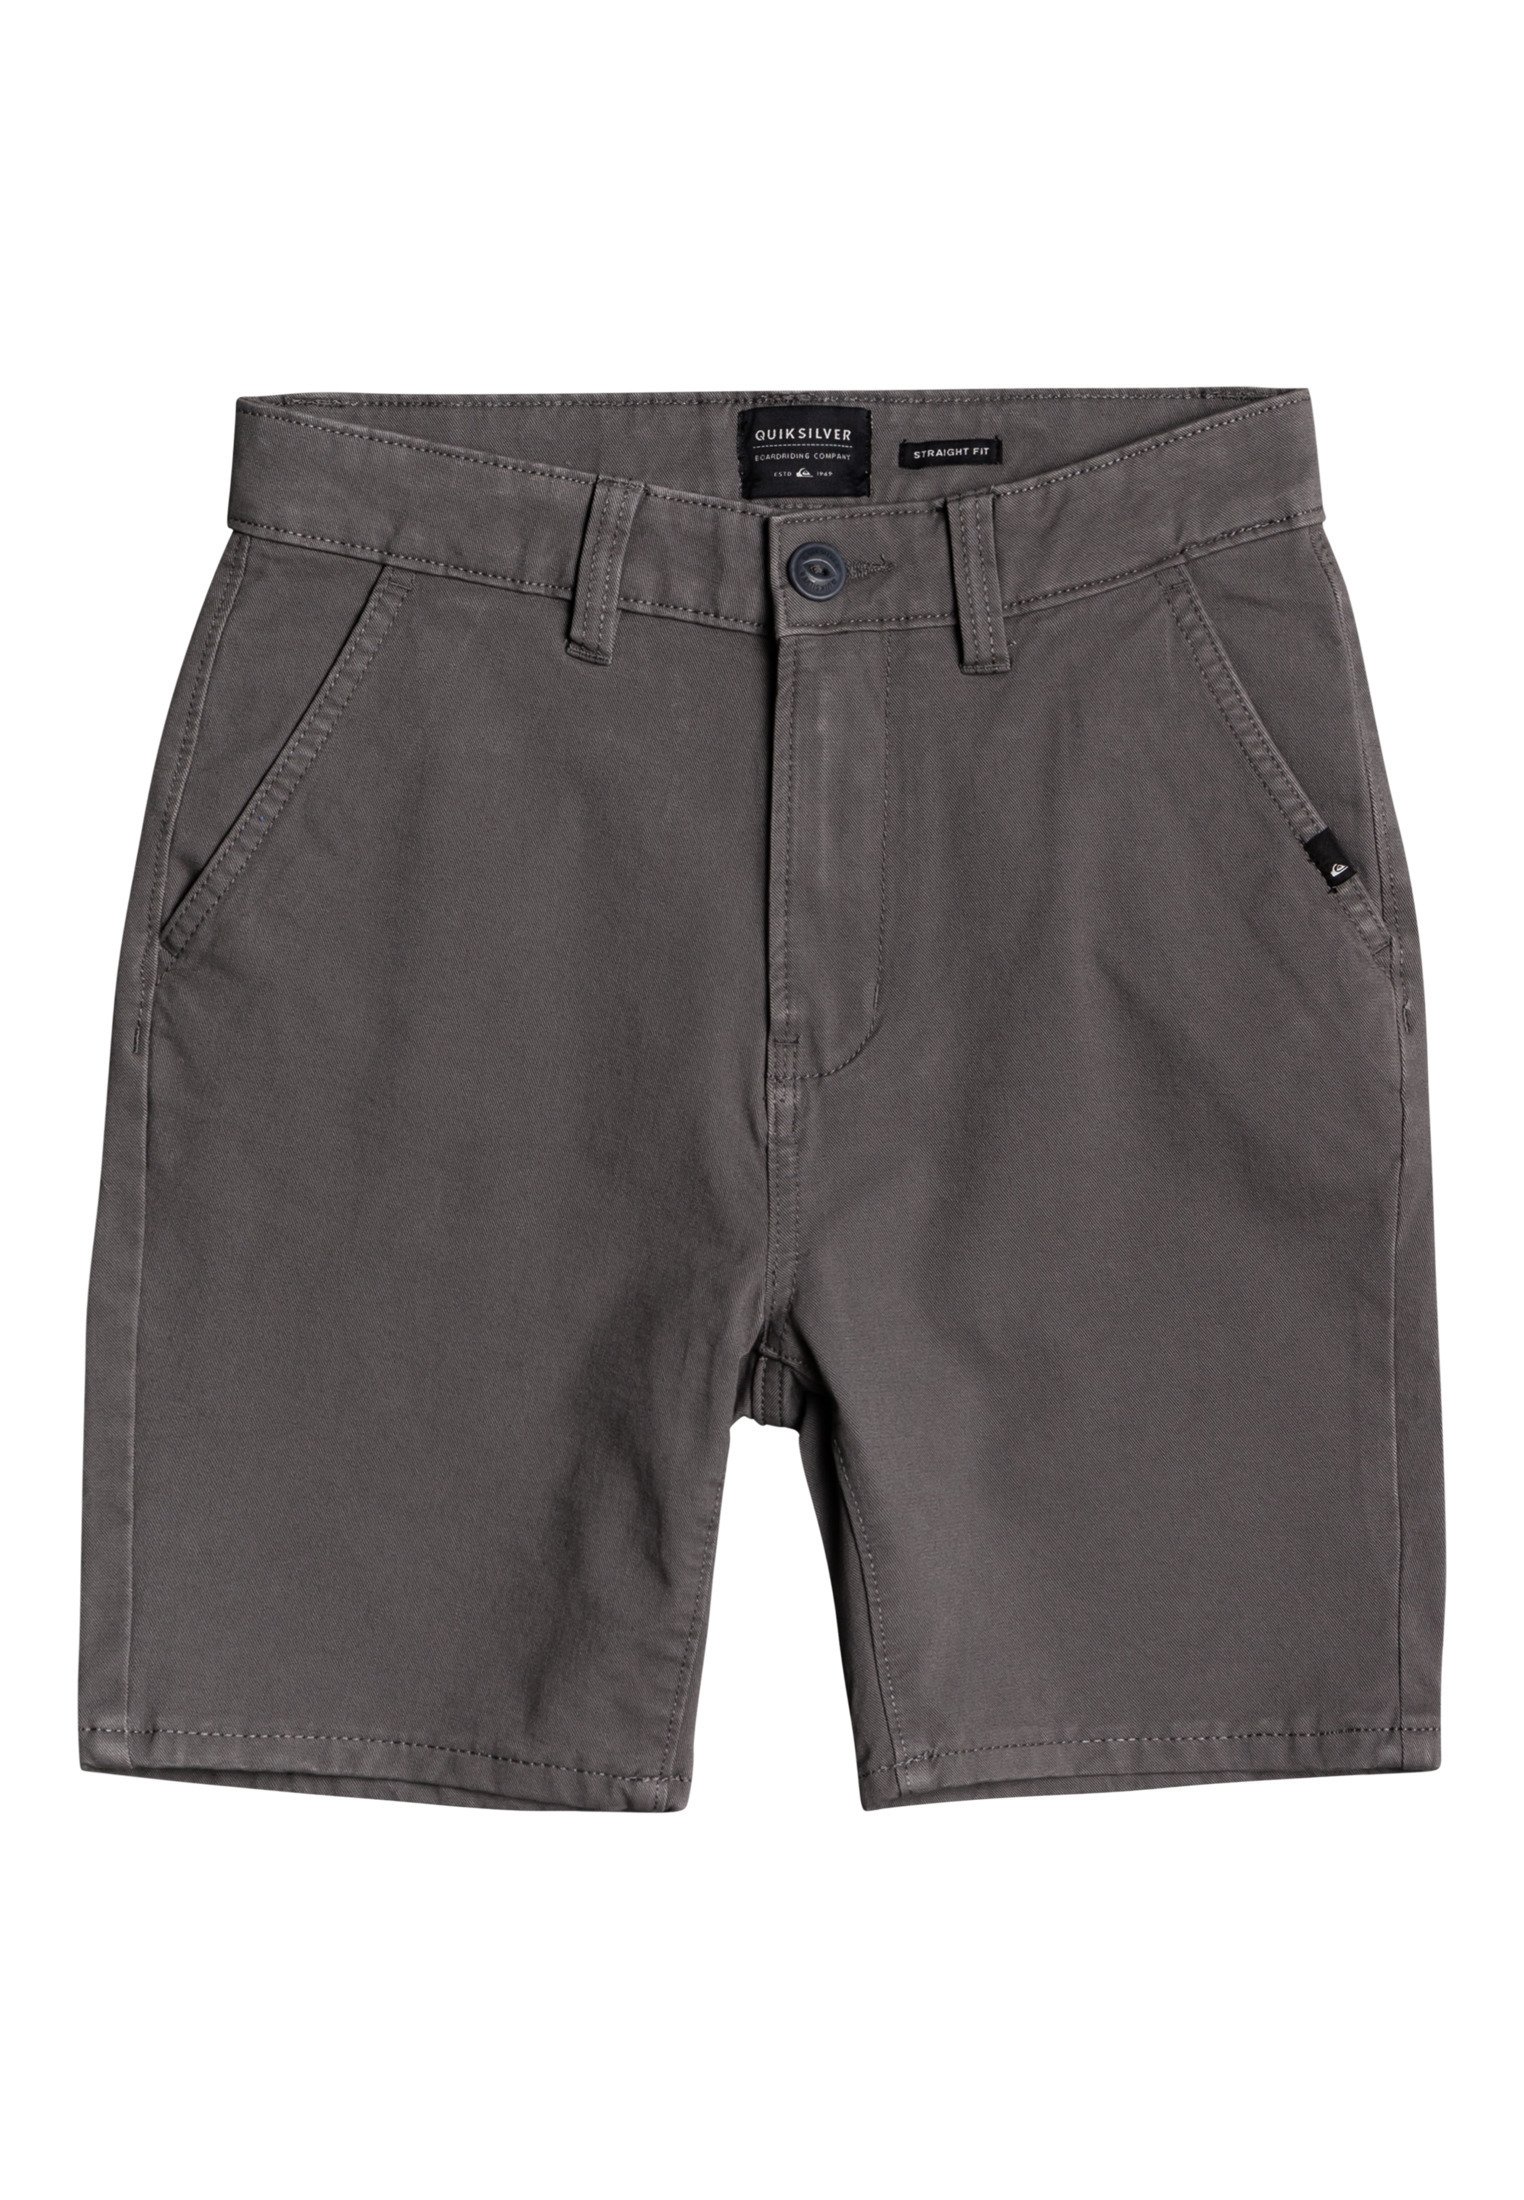 Quiksilver Shorts - quiet shade/grau